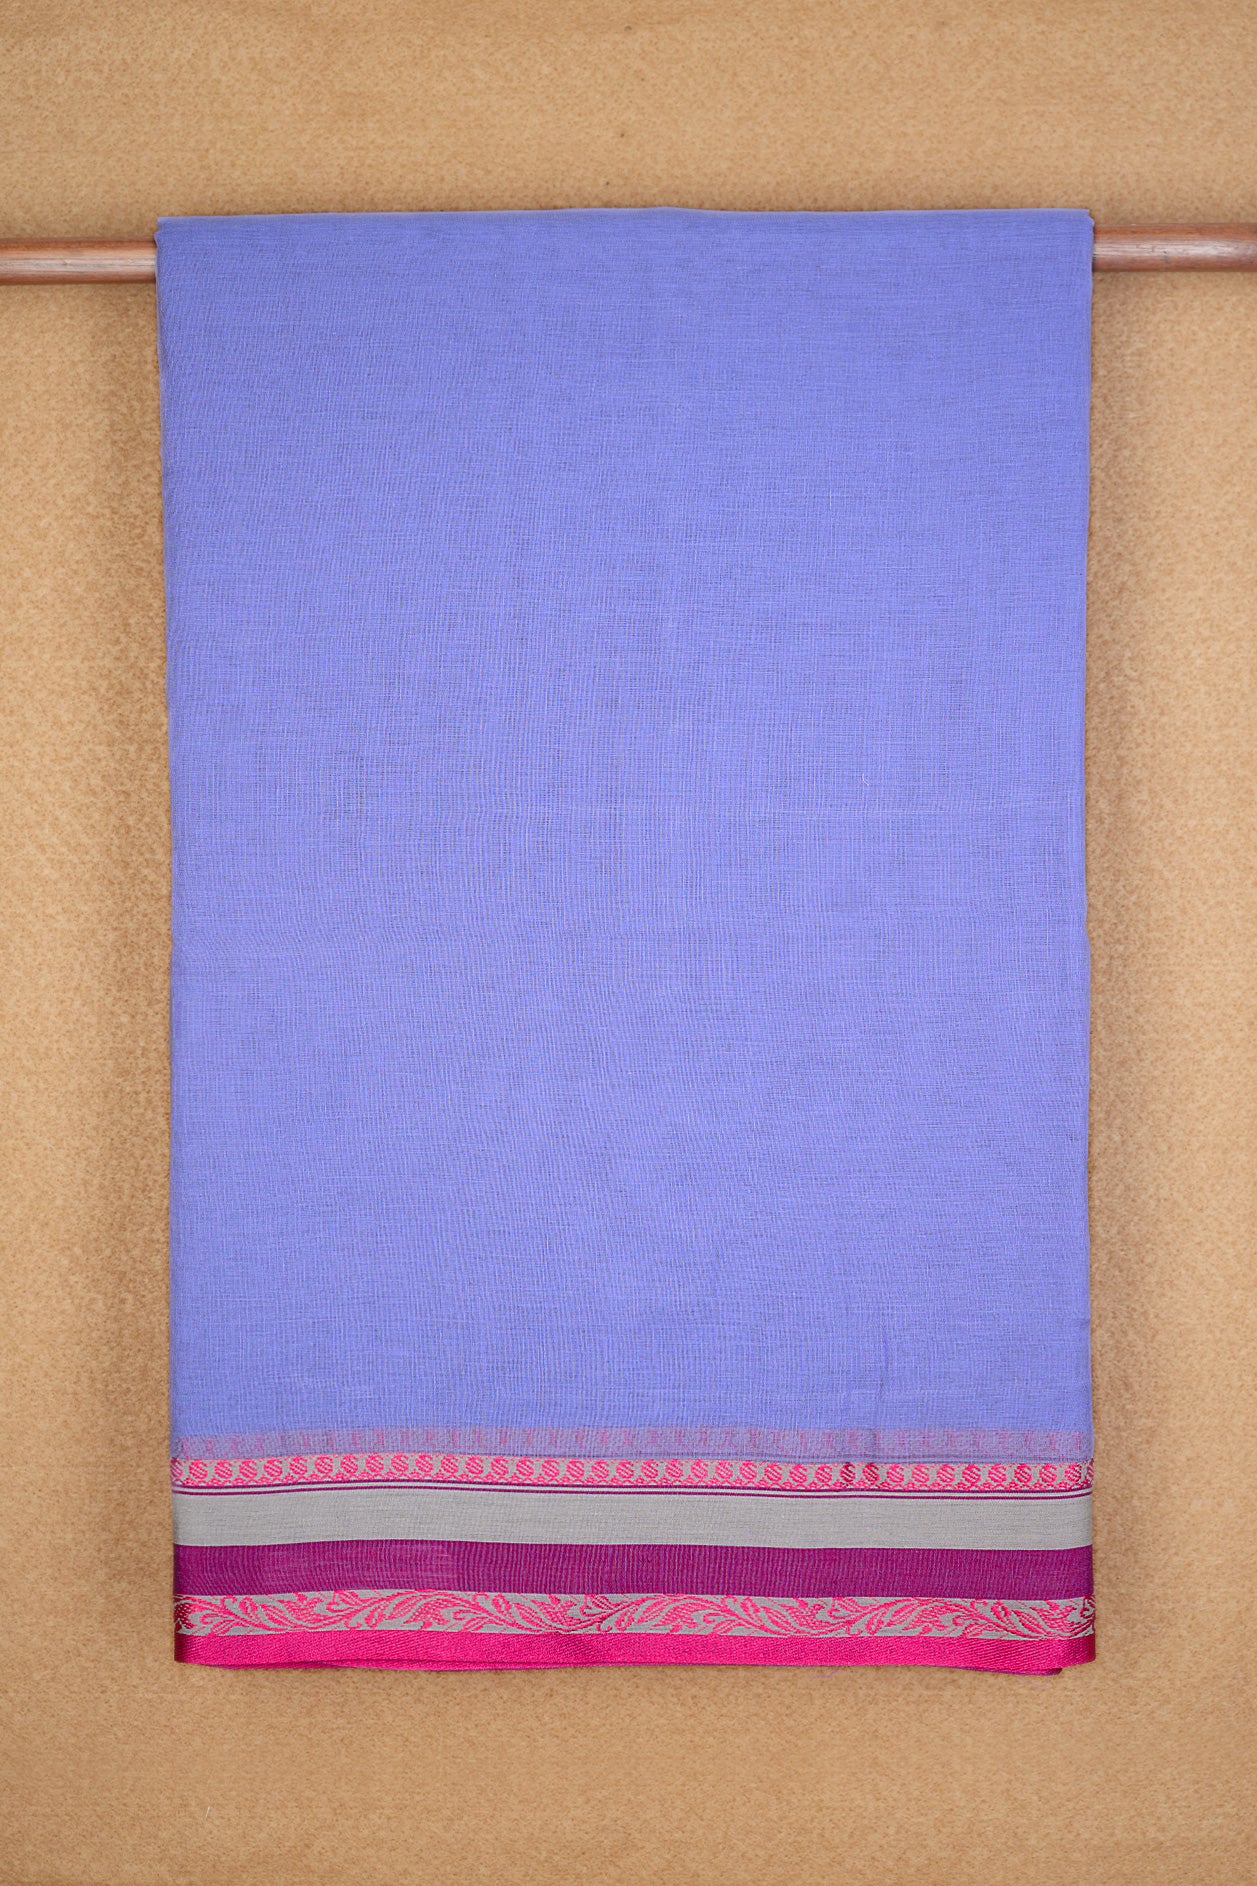 Paisley And Floral Design Threadwork Border Lavender Bengal Cotton Saree